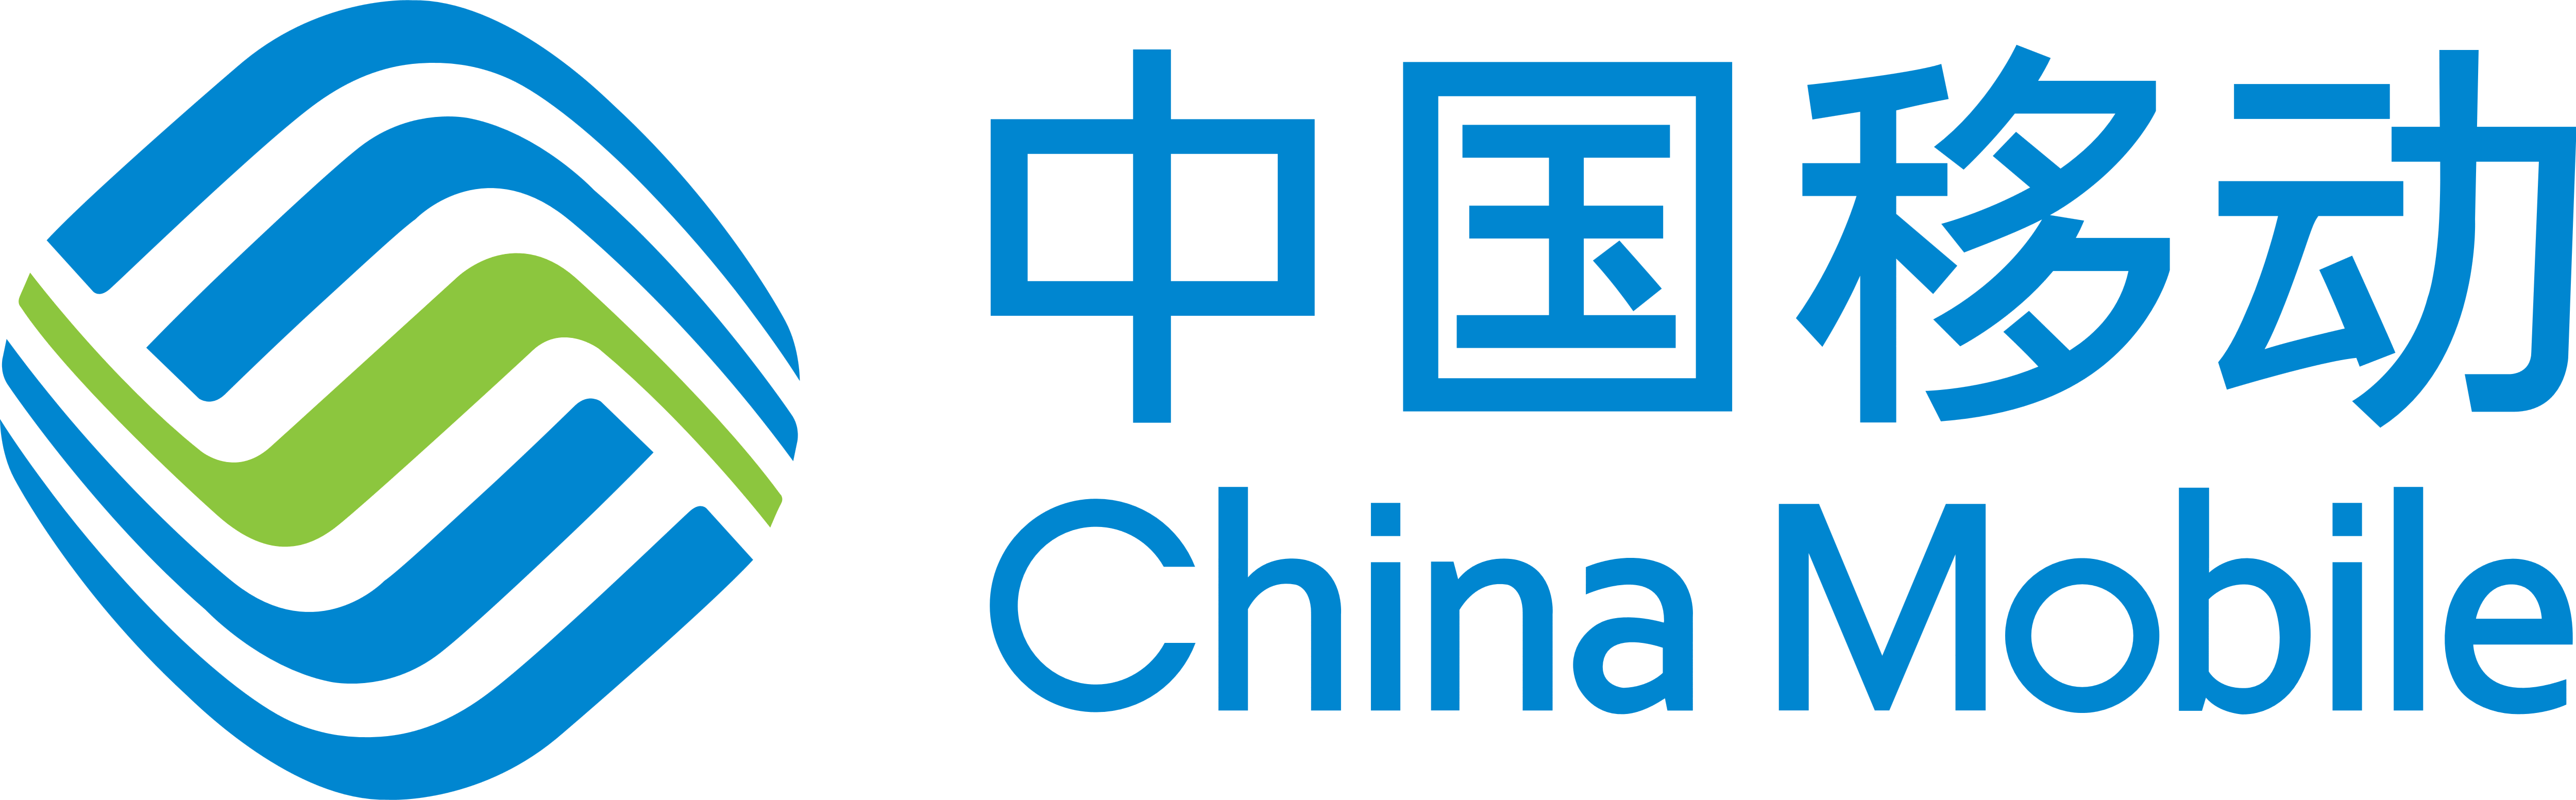 China Mobile Brand Logo